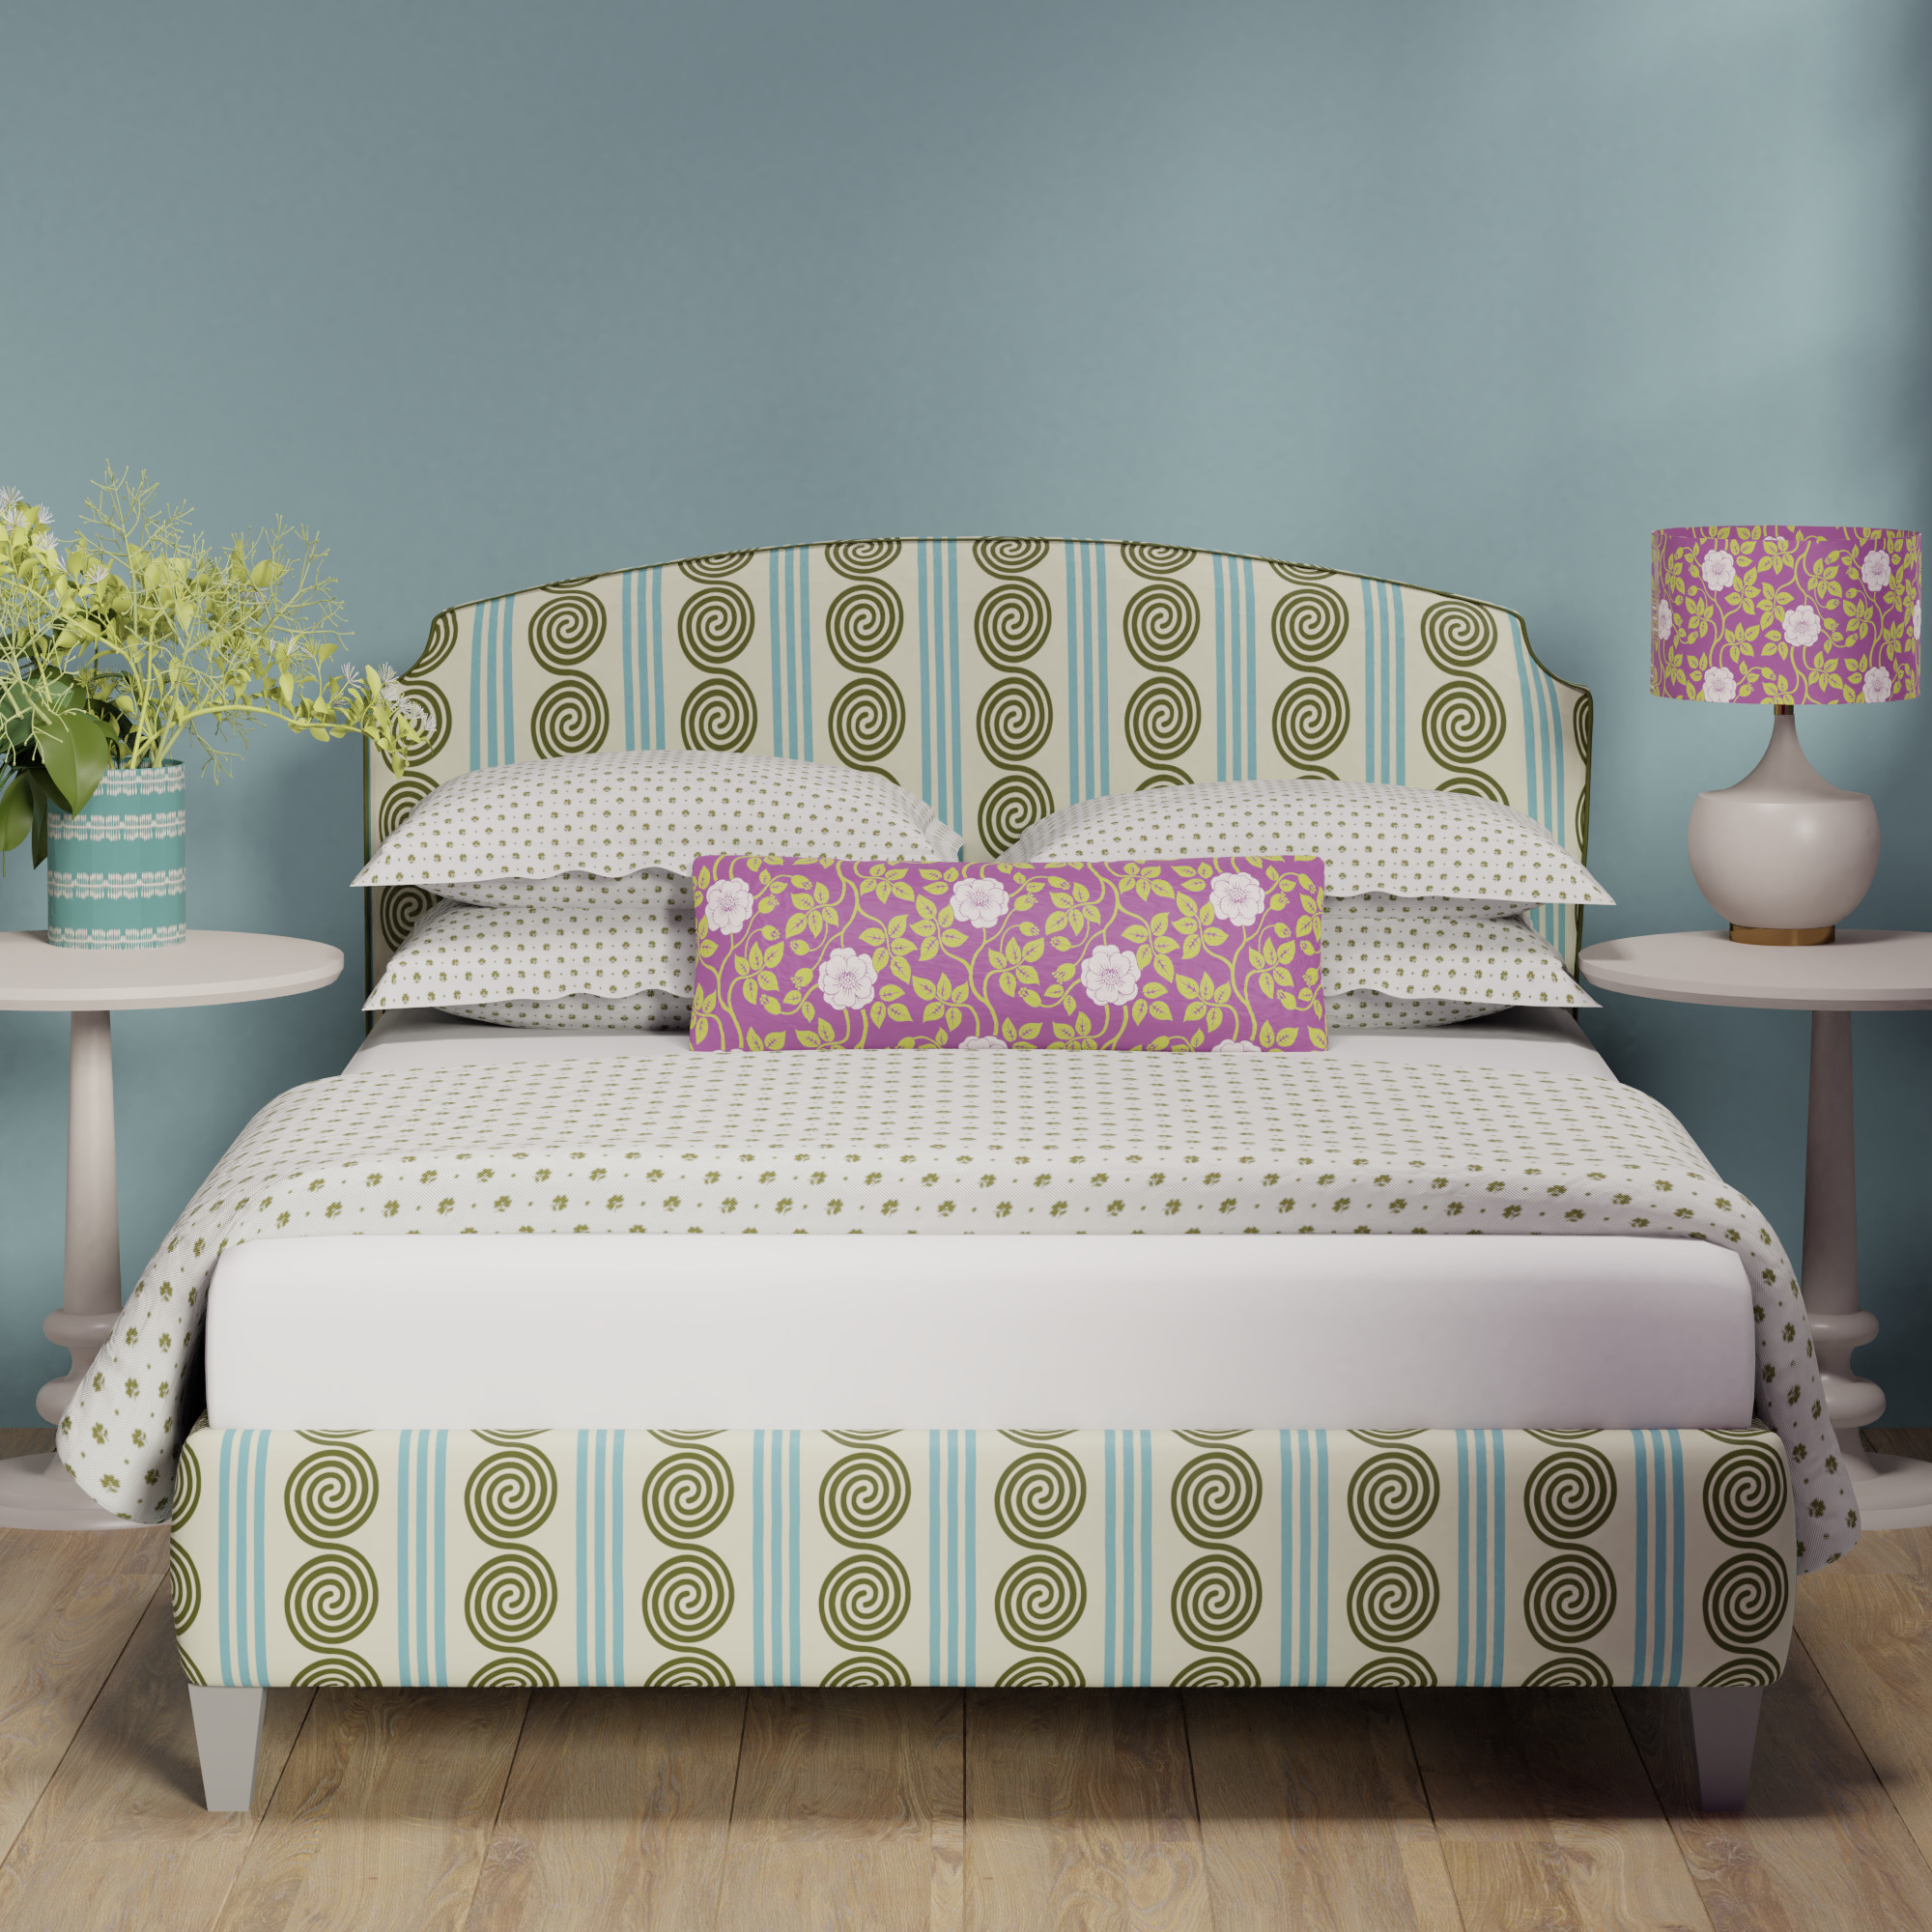 Upholstered beds & bed frames by The Original Bed Co